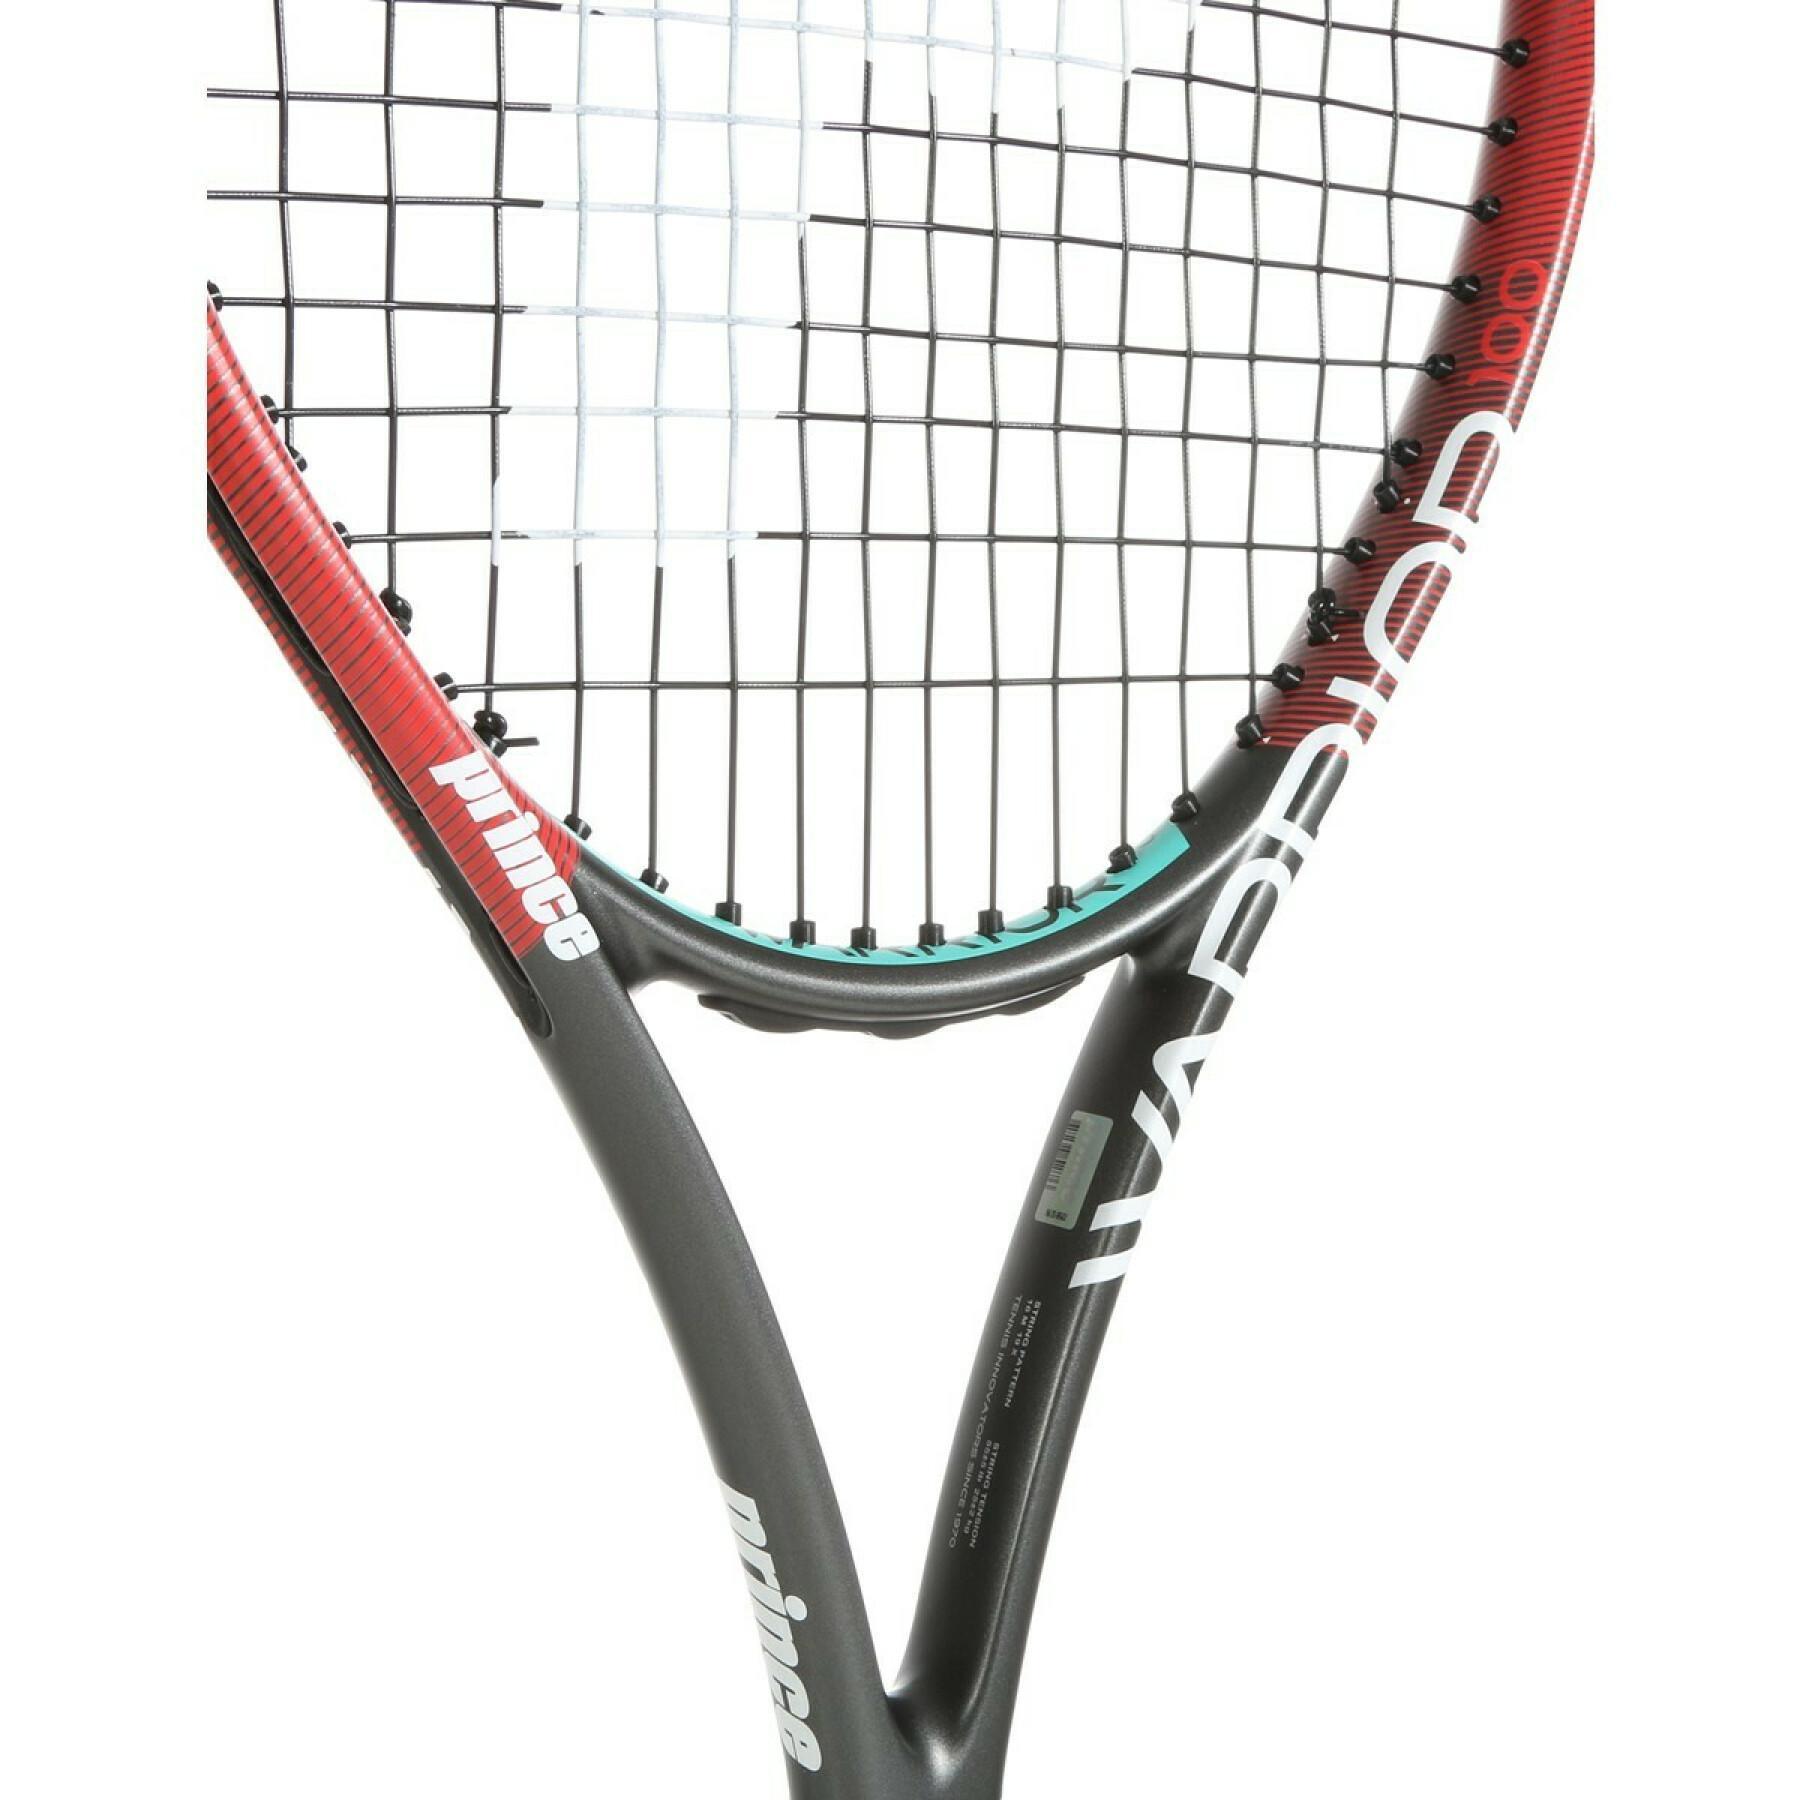 Tennis racket Prince warrior 100 (285g)